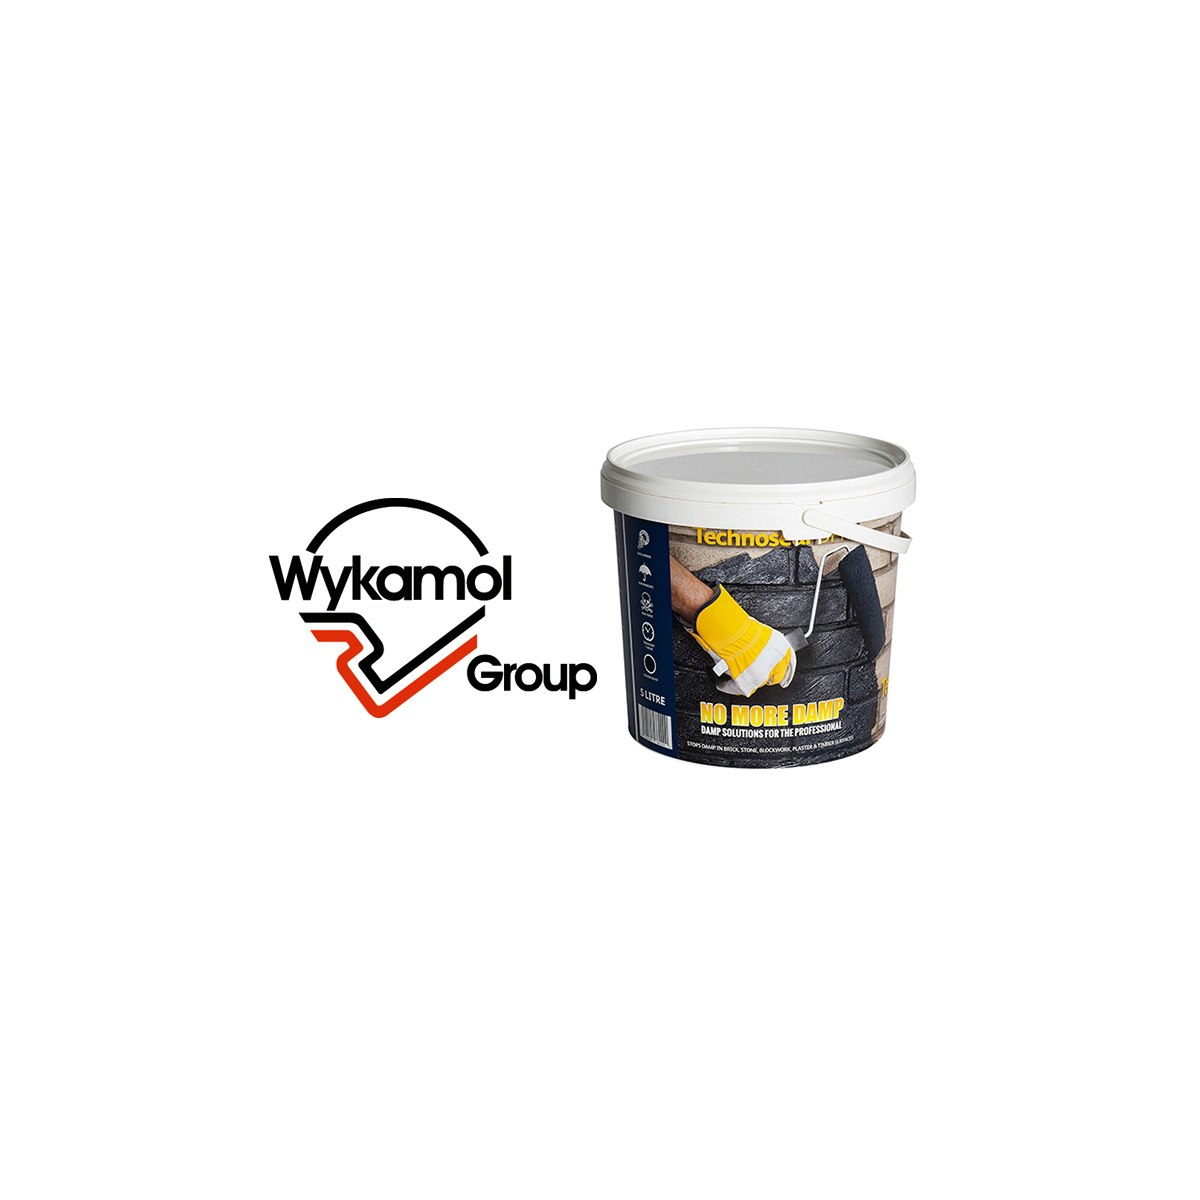 Wykamol Technoseal DPM Damp Proof Paint 5 Litre Black